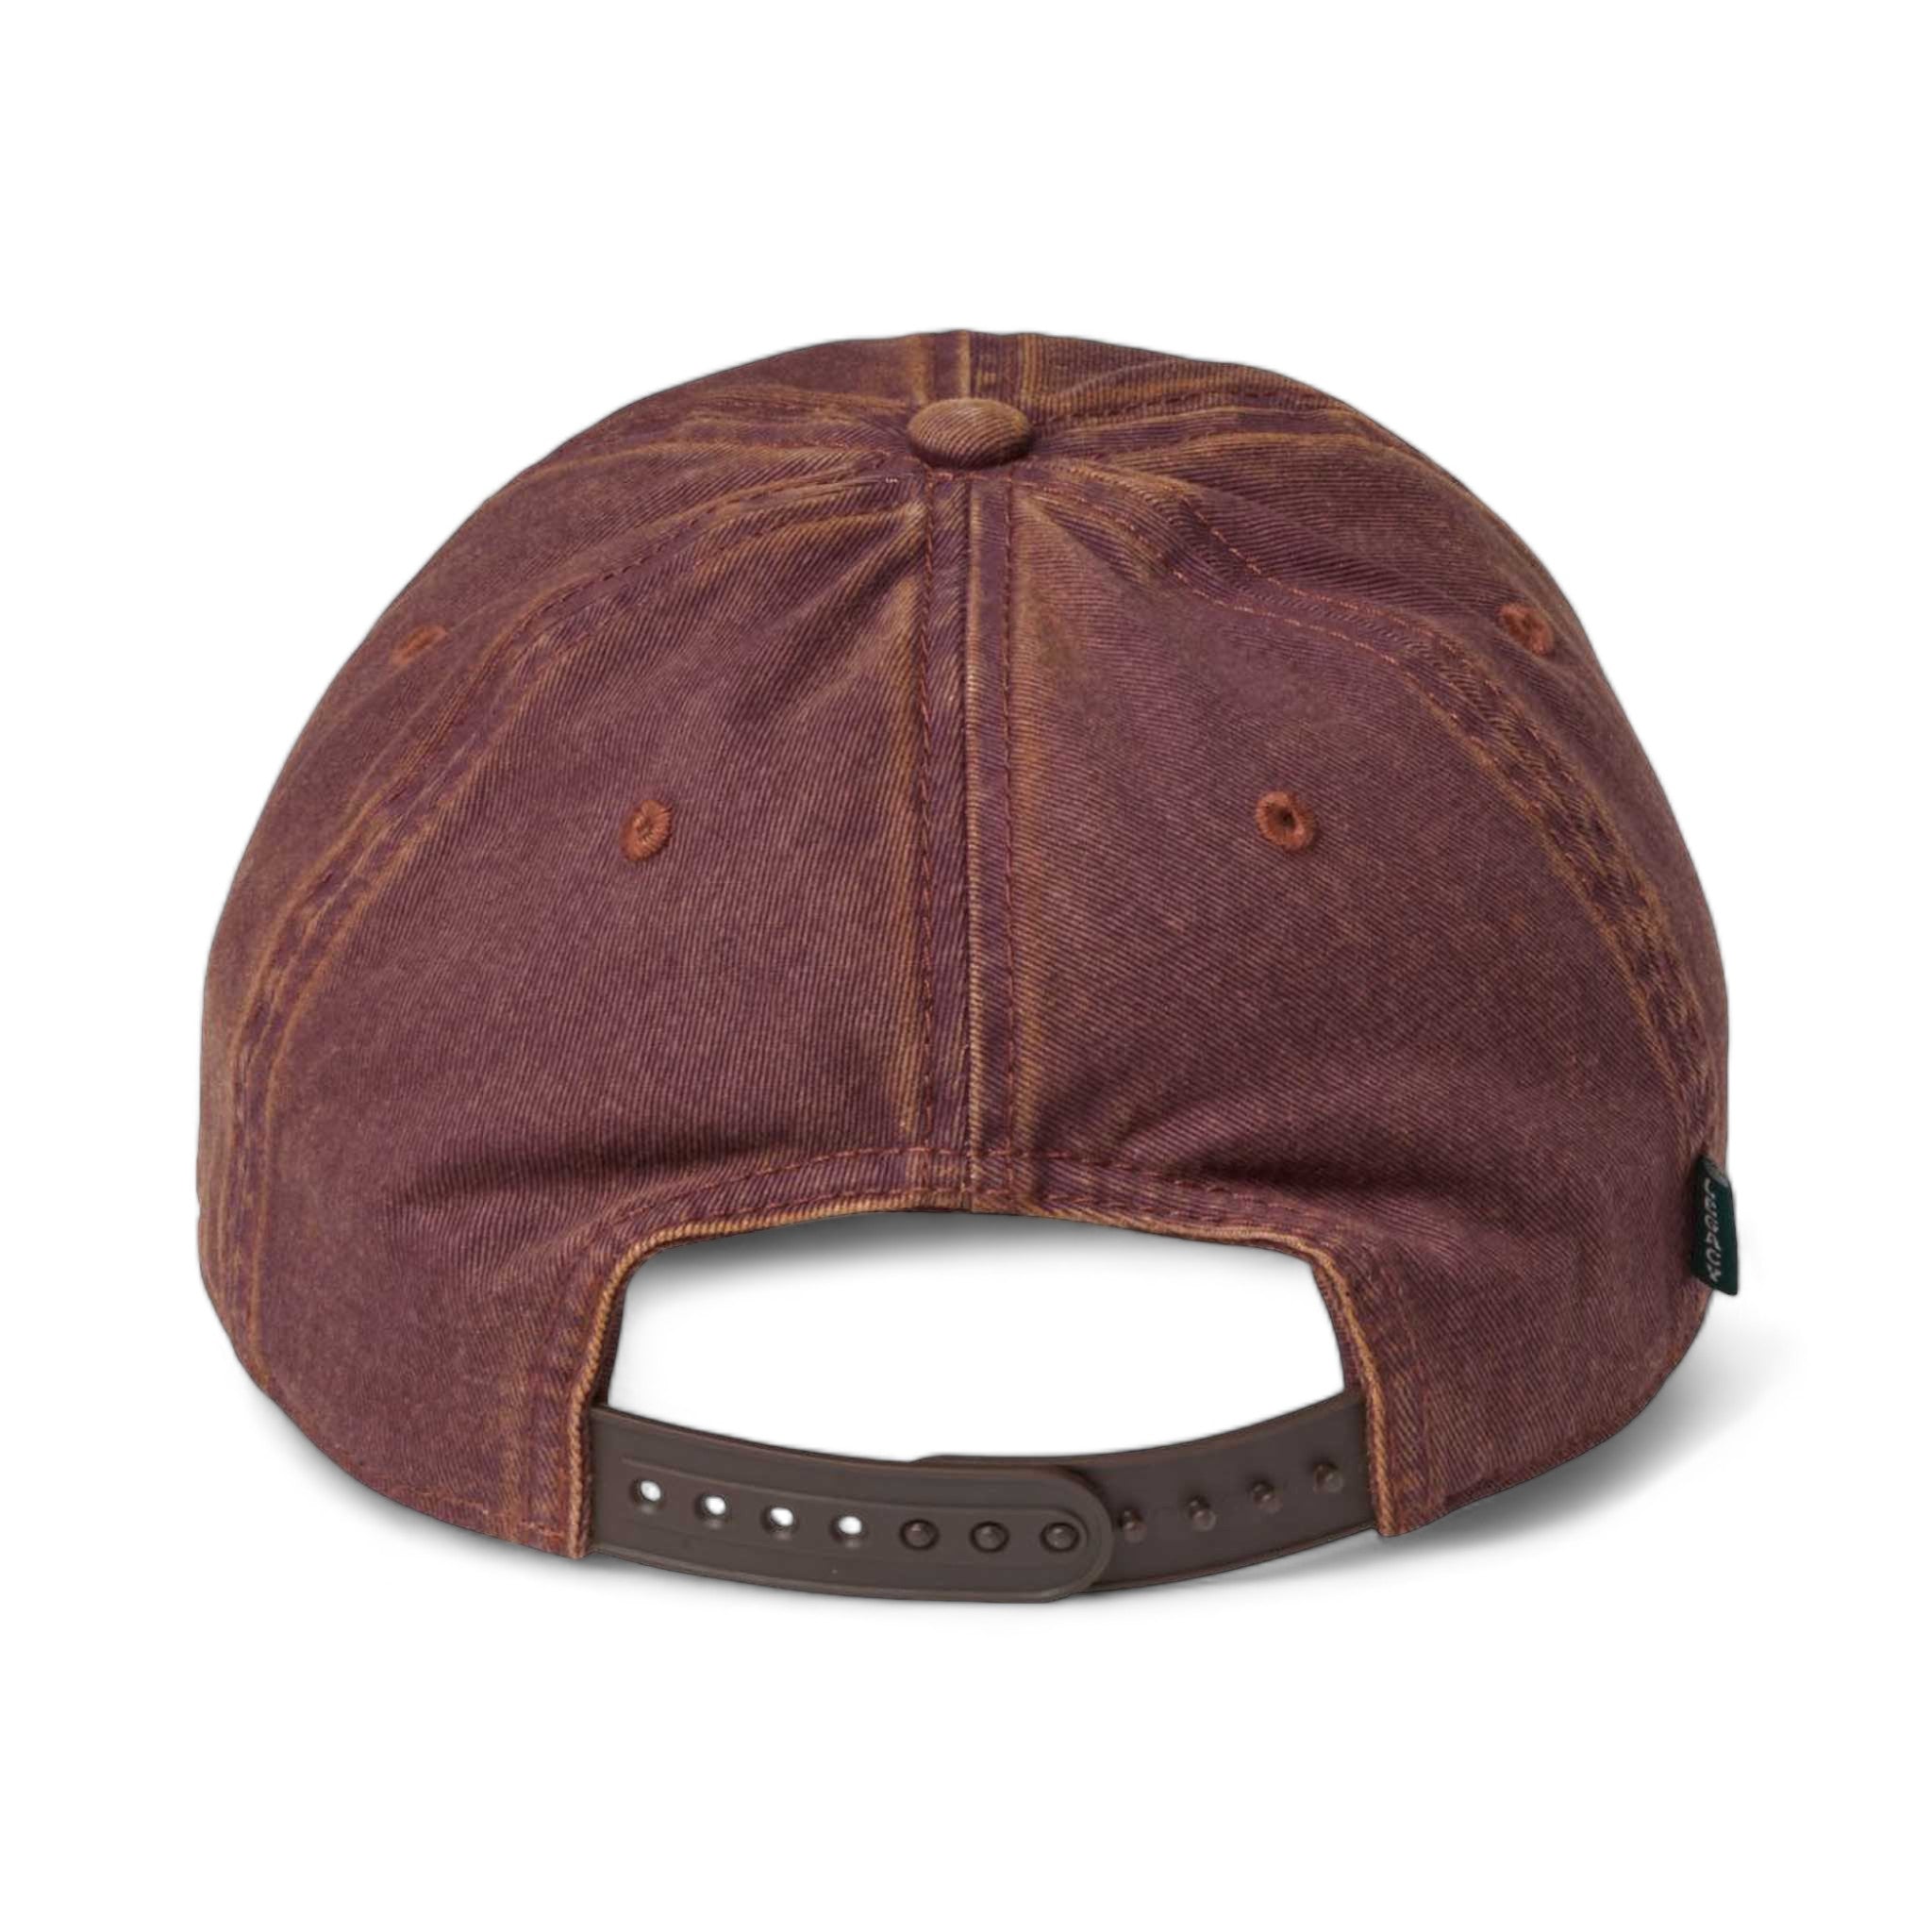 Back view of LEGACY OFAST custom hat in burgundy